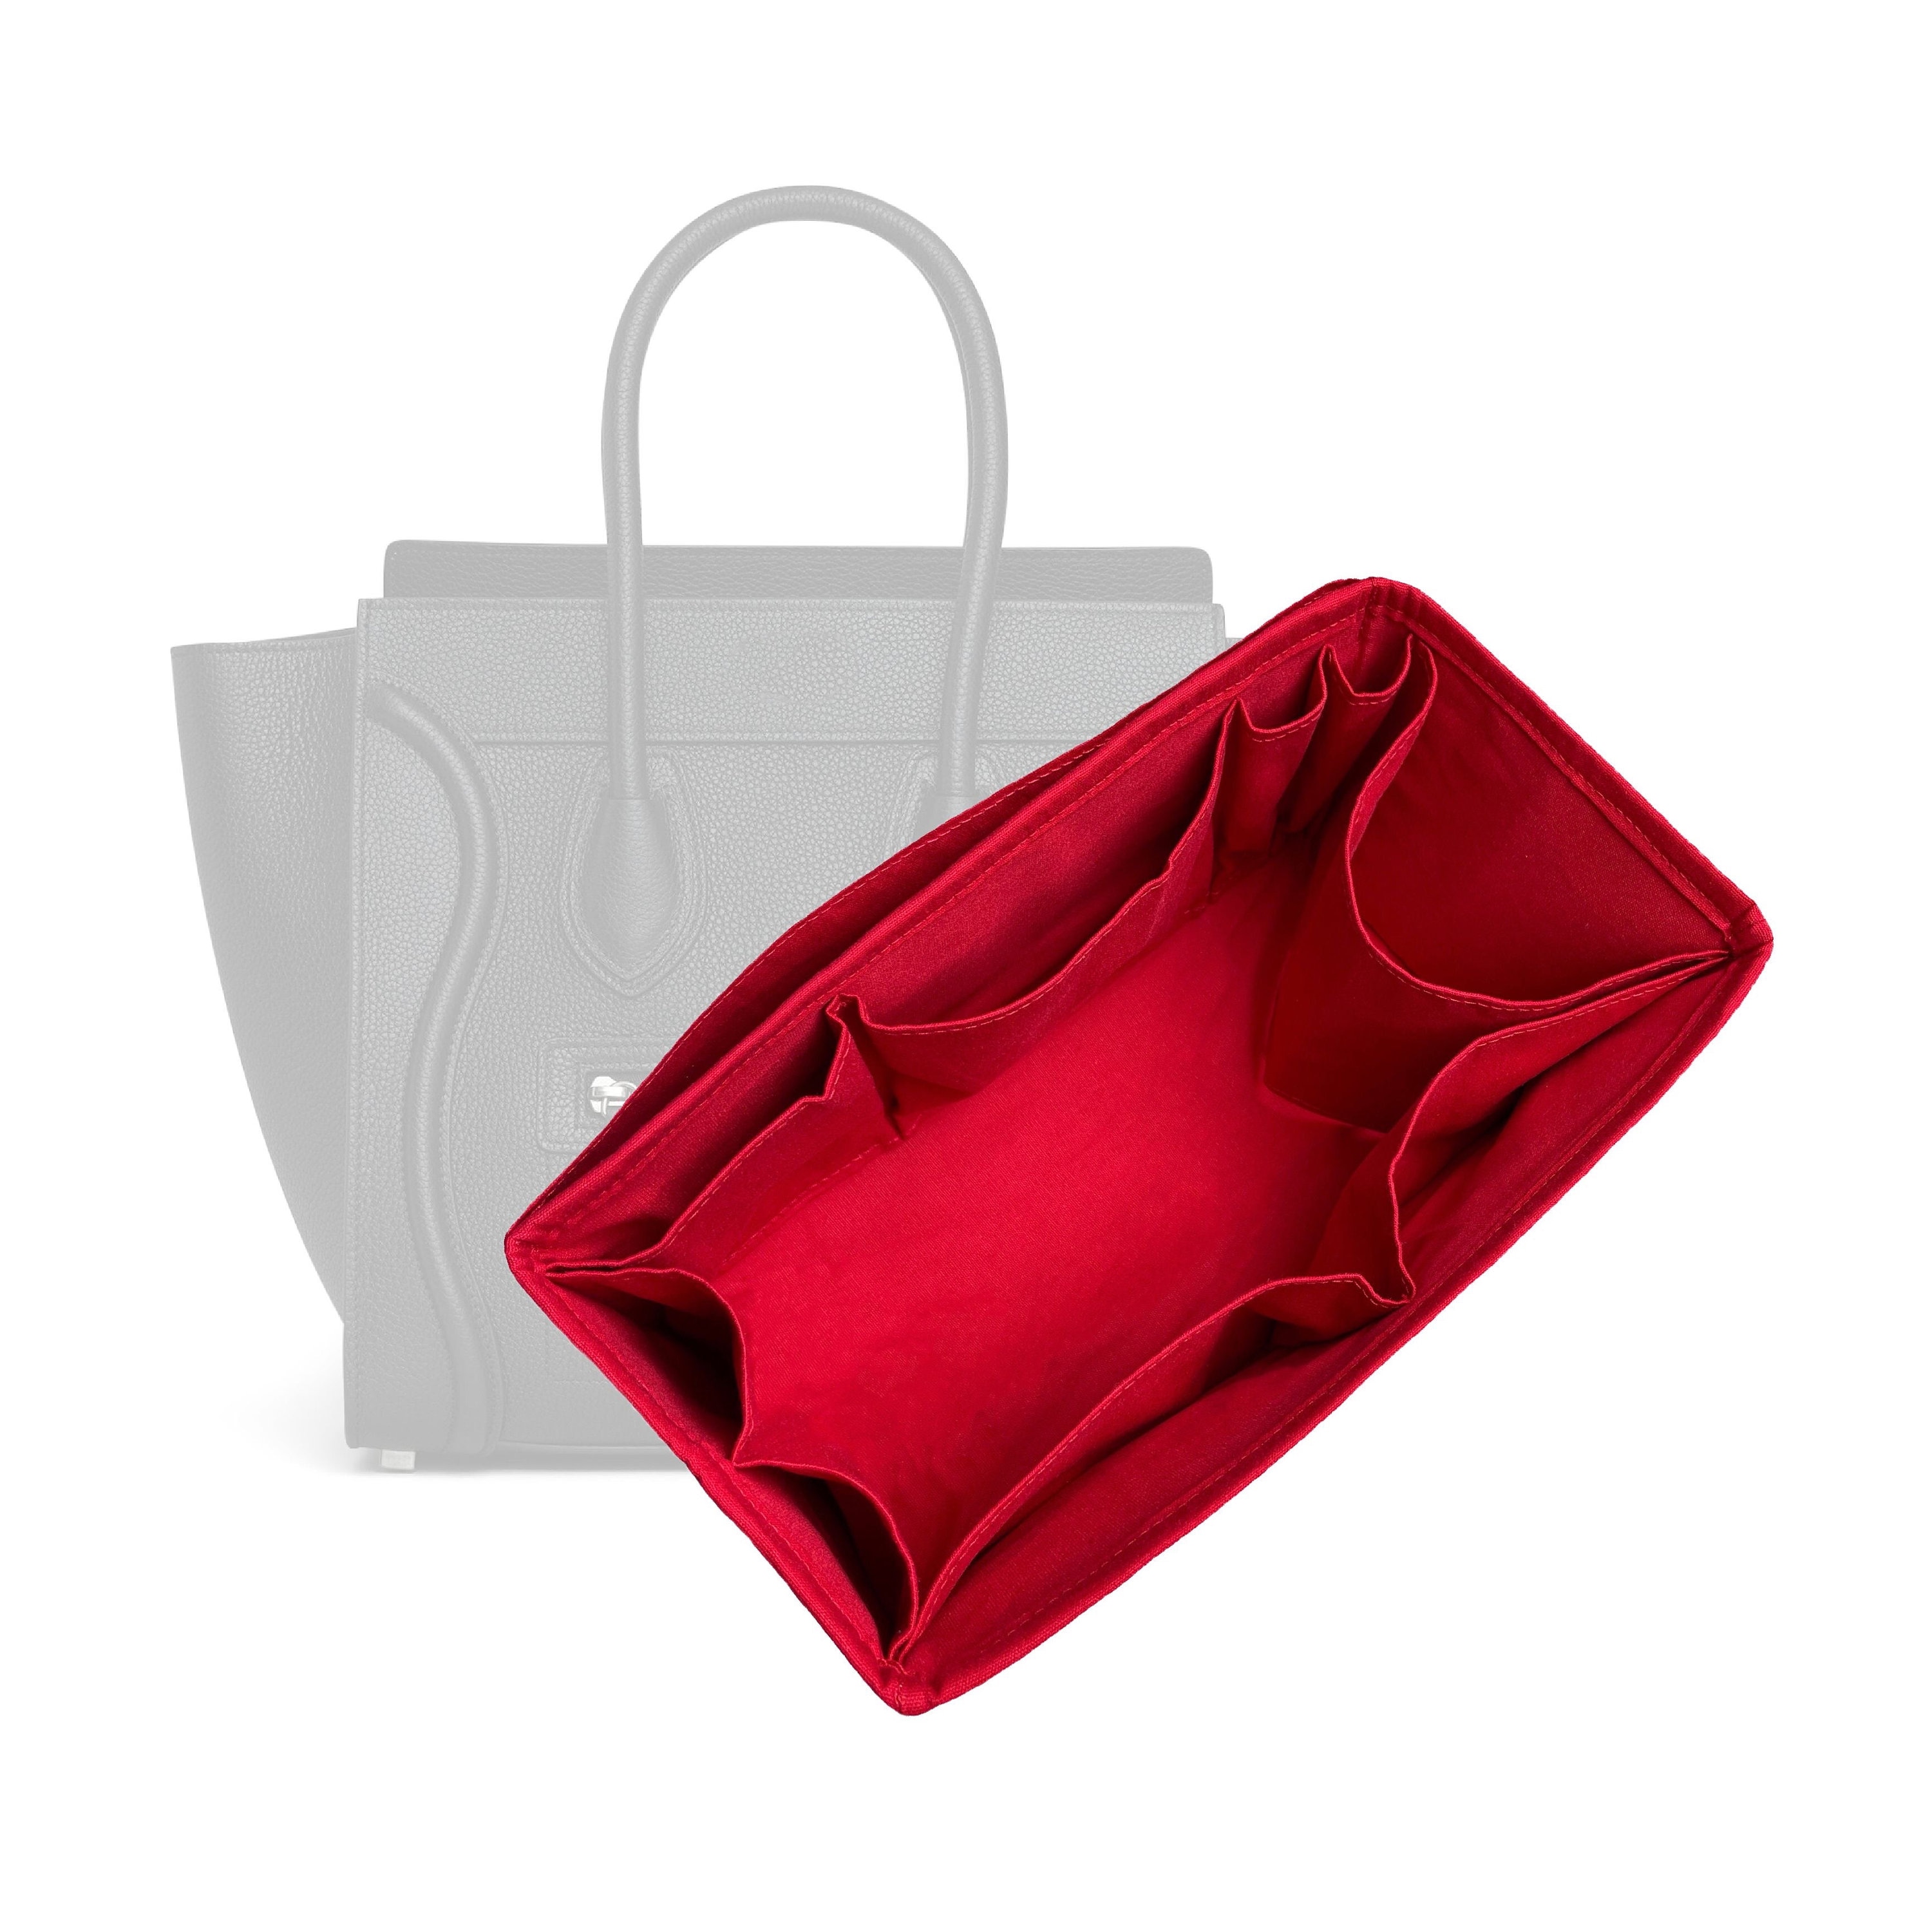 Purse Organizer Insert for Celine Cabas Phantom, Classic Model Bag Organizer with iPad Pocket